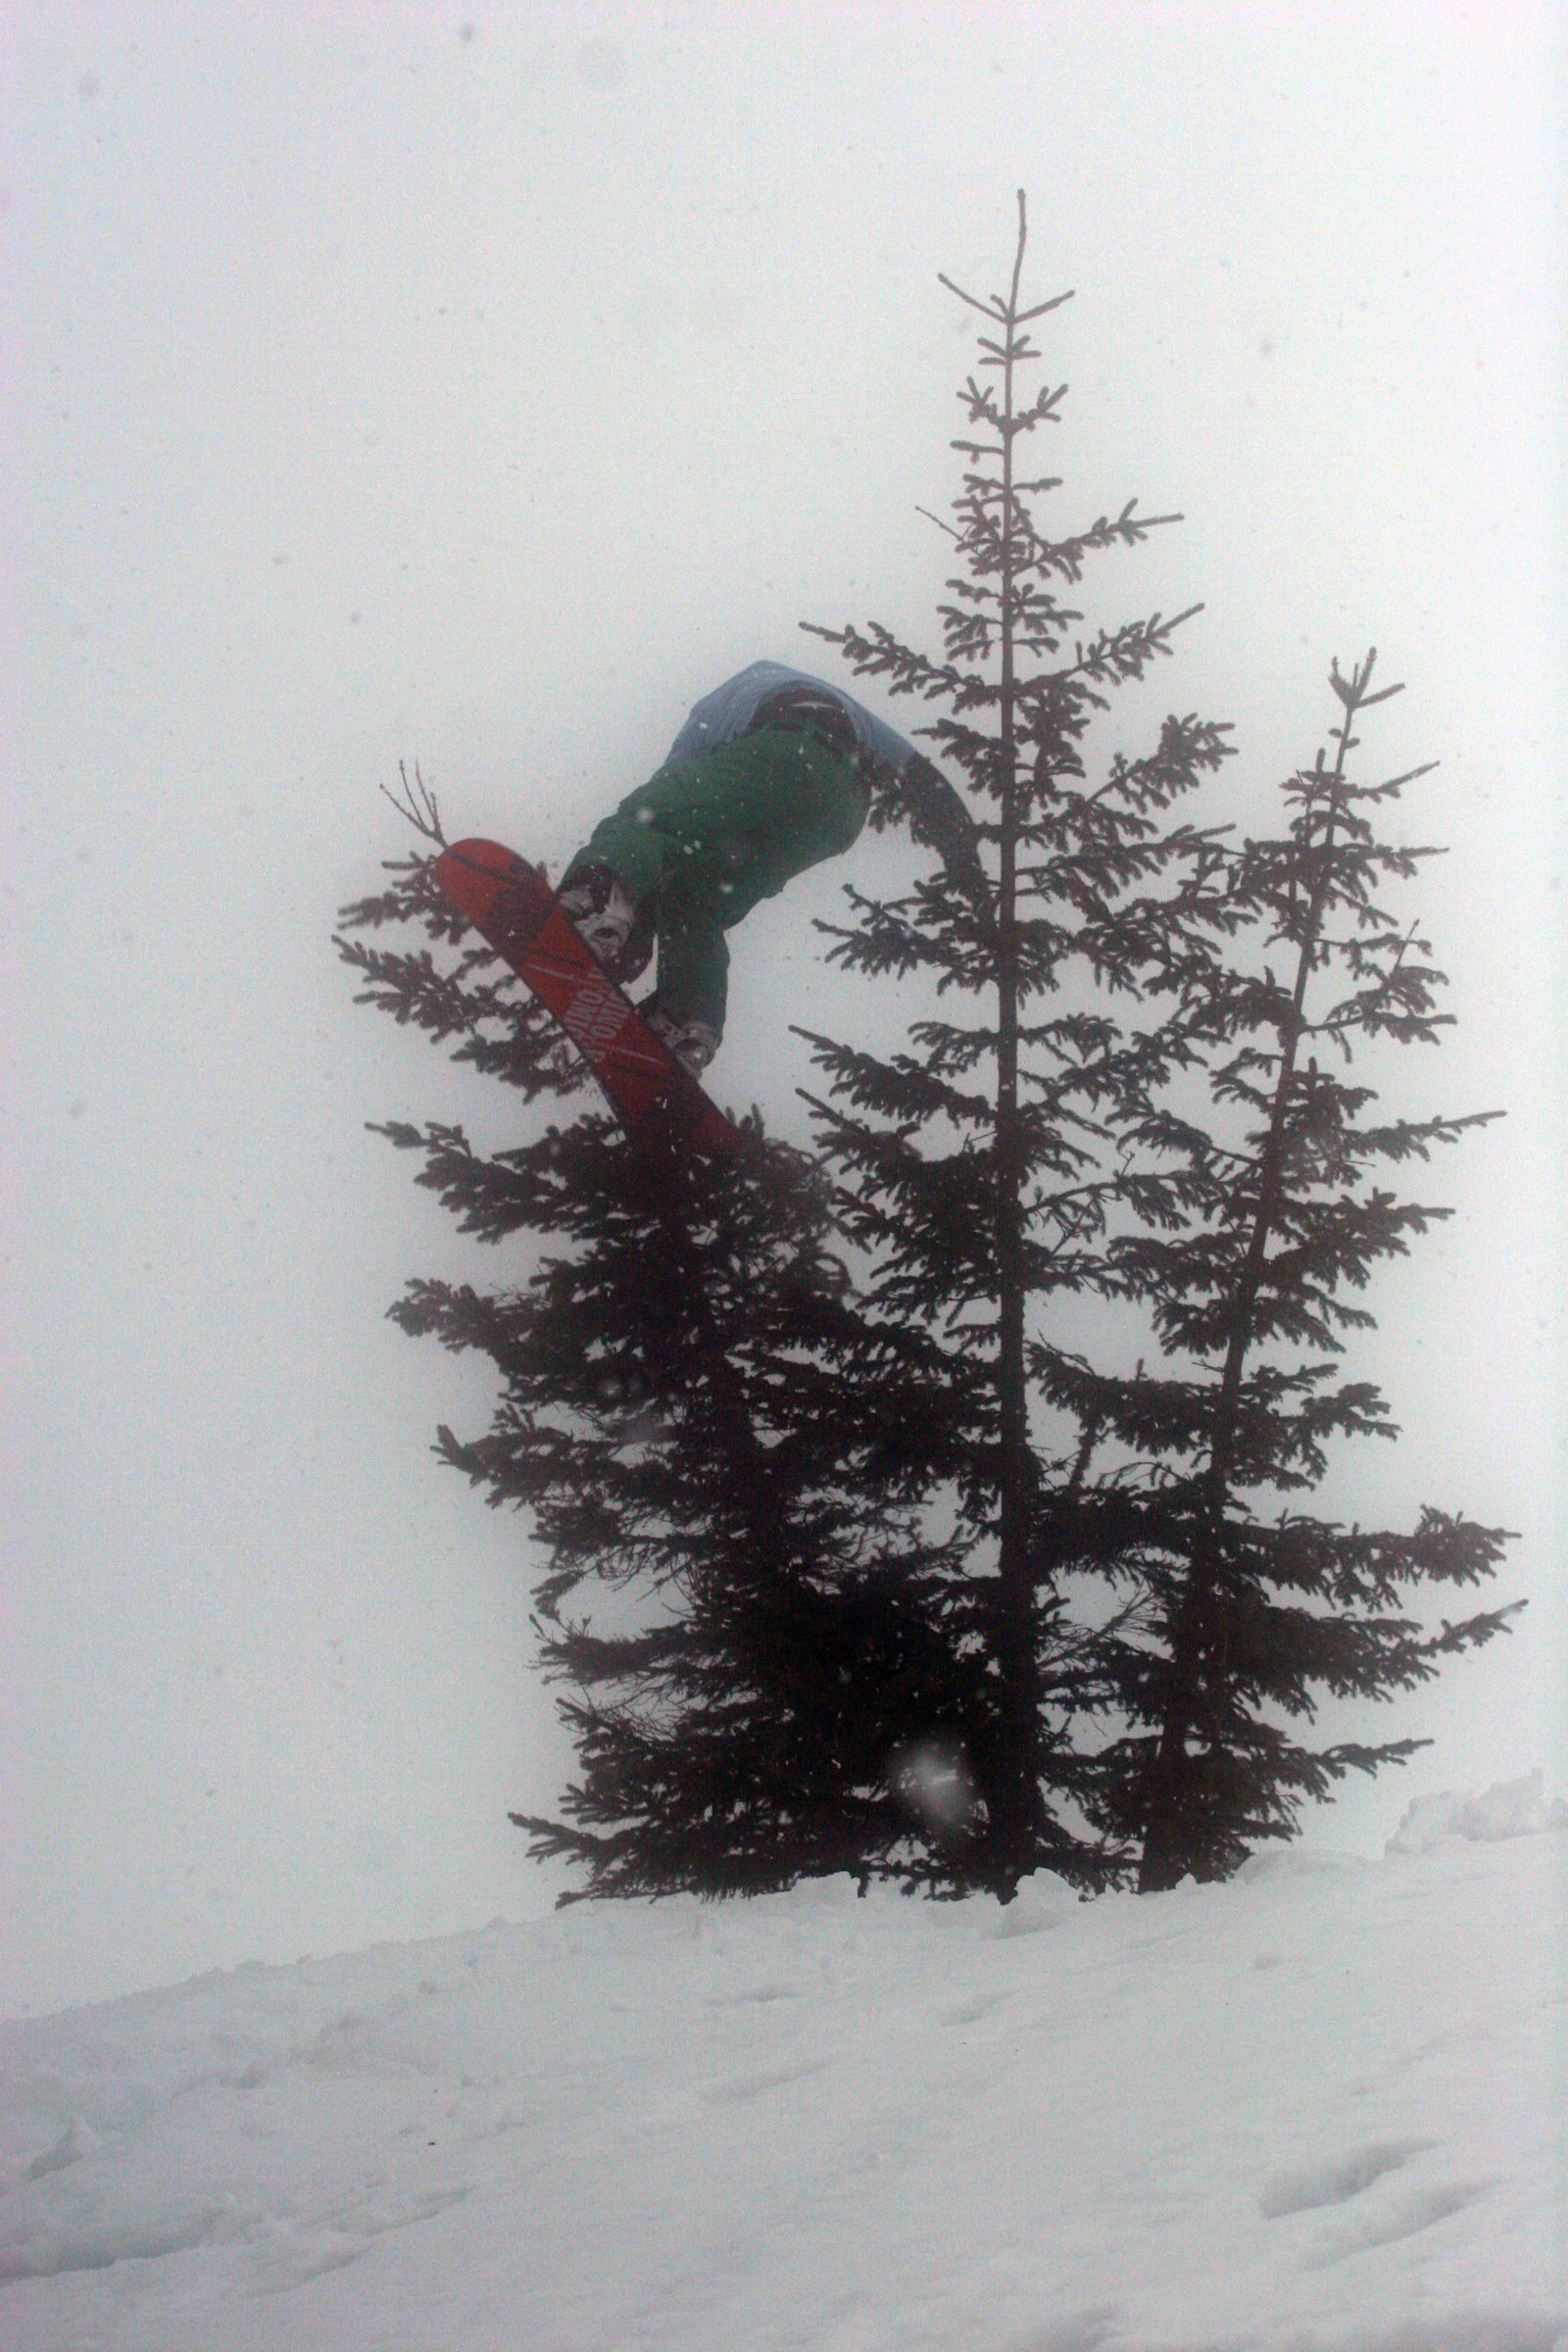 Snowboard treebonk #2